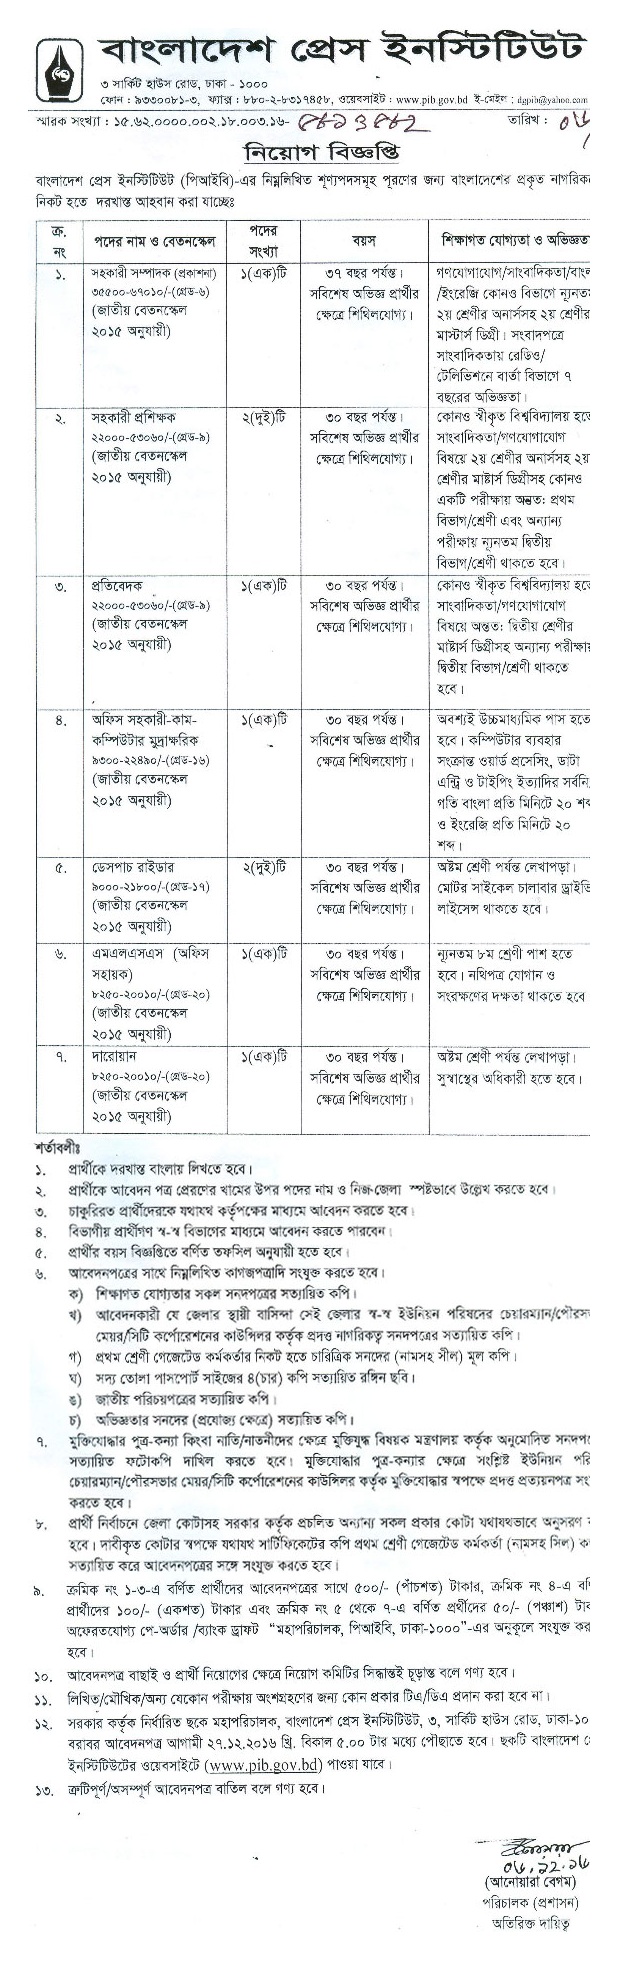 Bangladesh Press Institute Job Circular December 2016